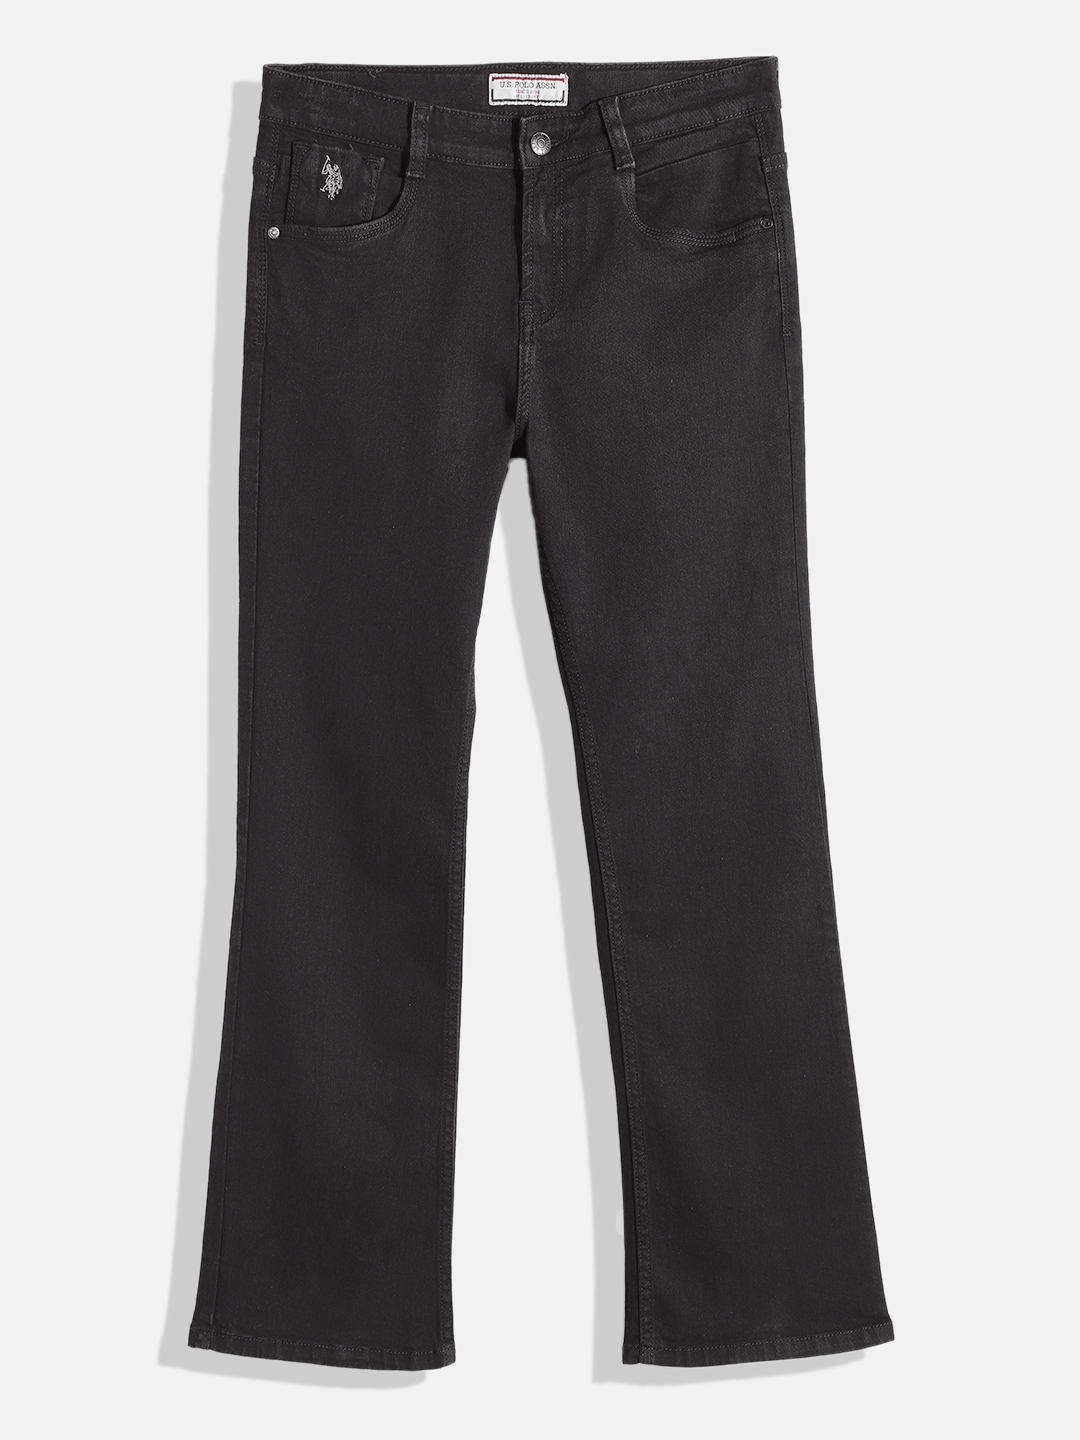 Buy U.S. Polo Assn. Kids Boys Bootcut Light Fade Stretchable Jeans ...